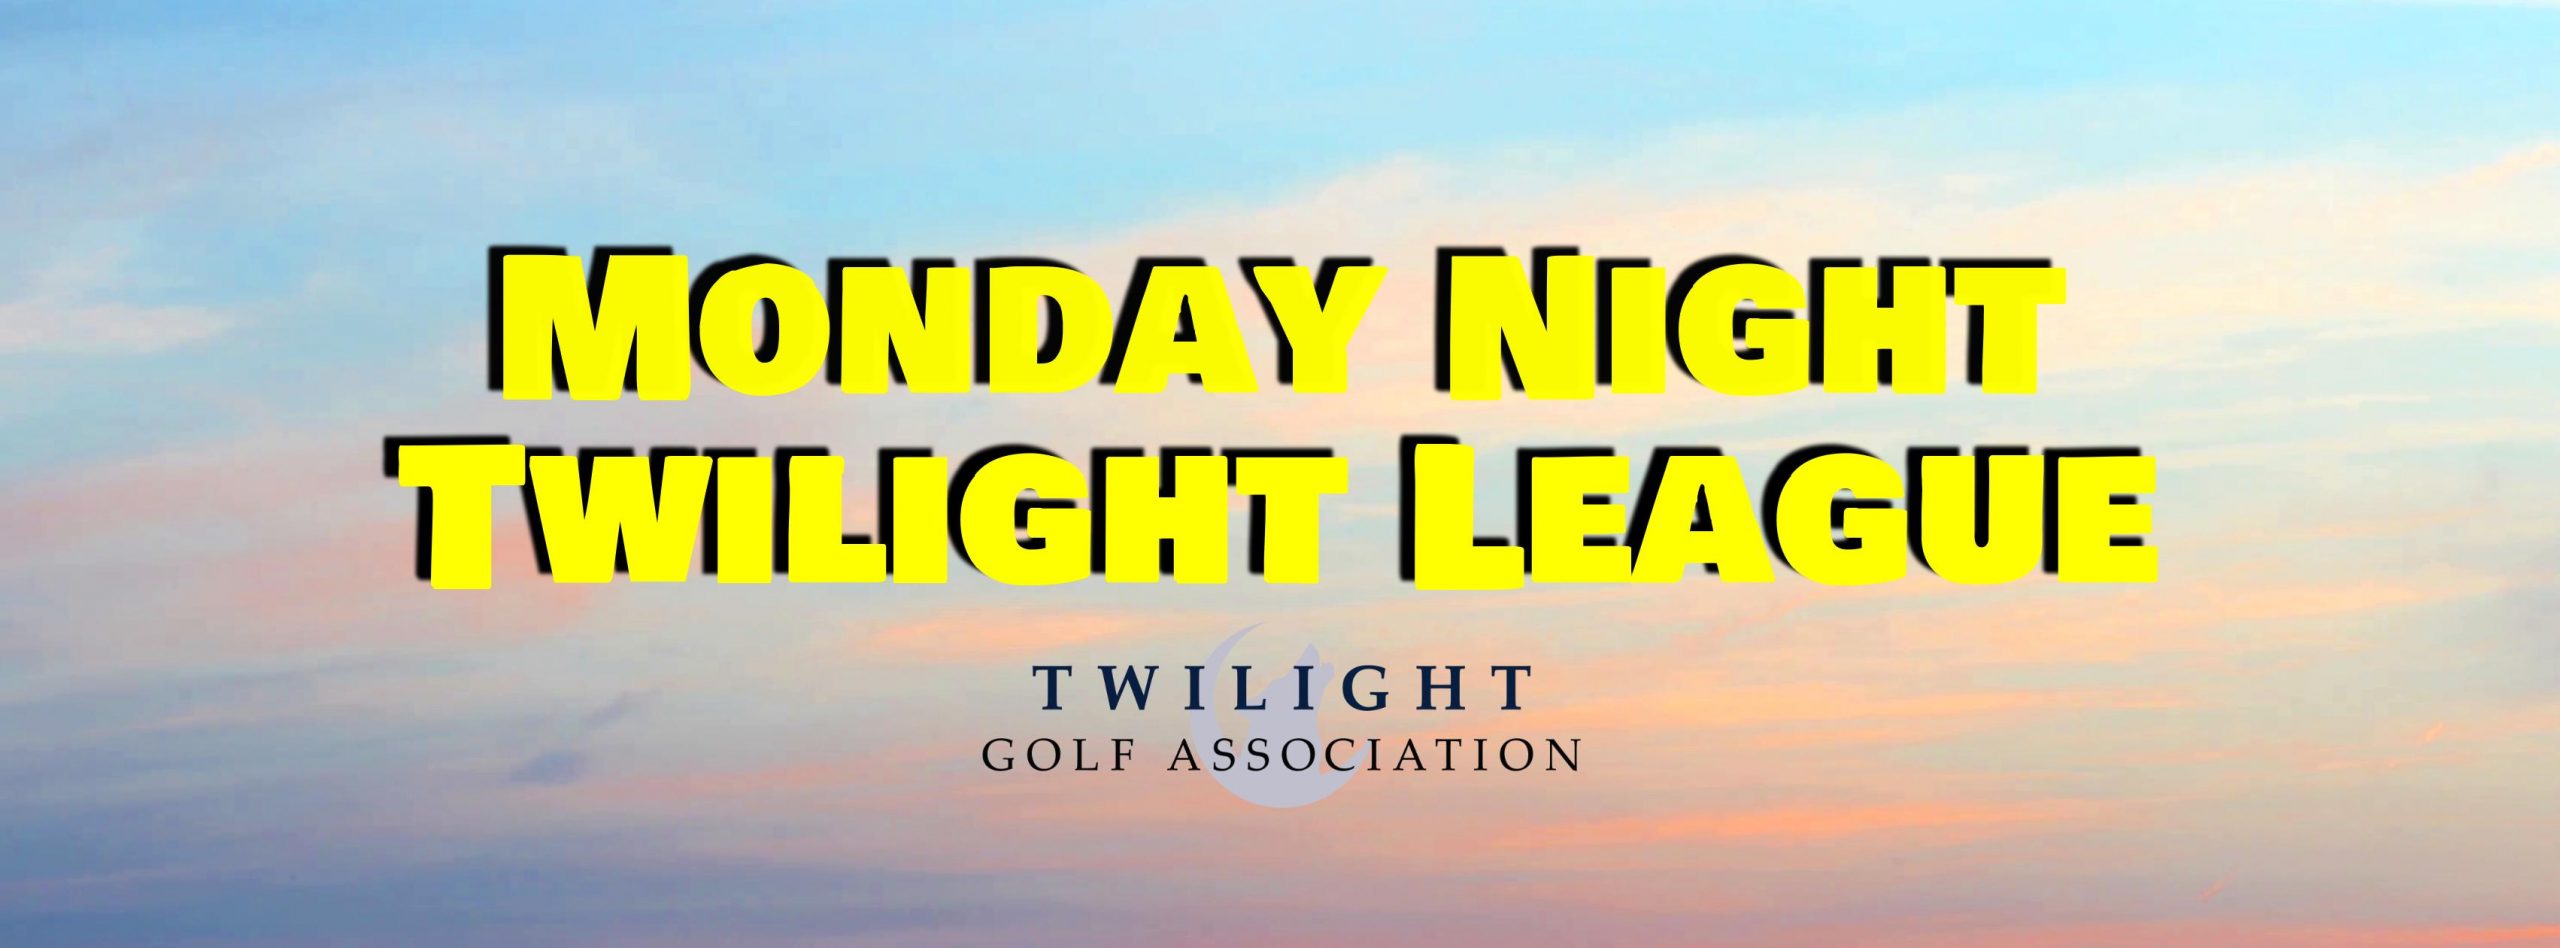 Monday Twilight League at Carroll Park Golf course